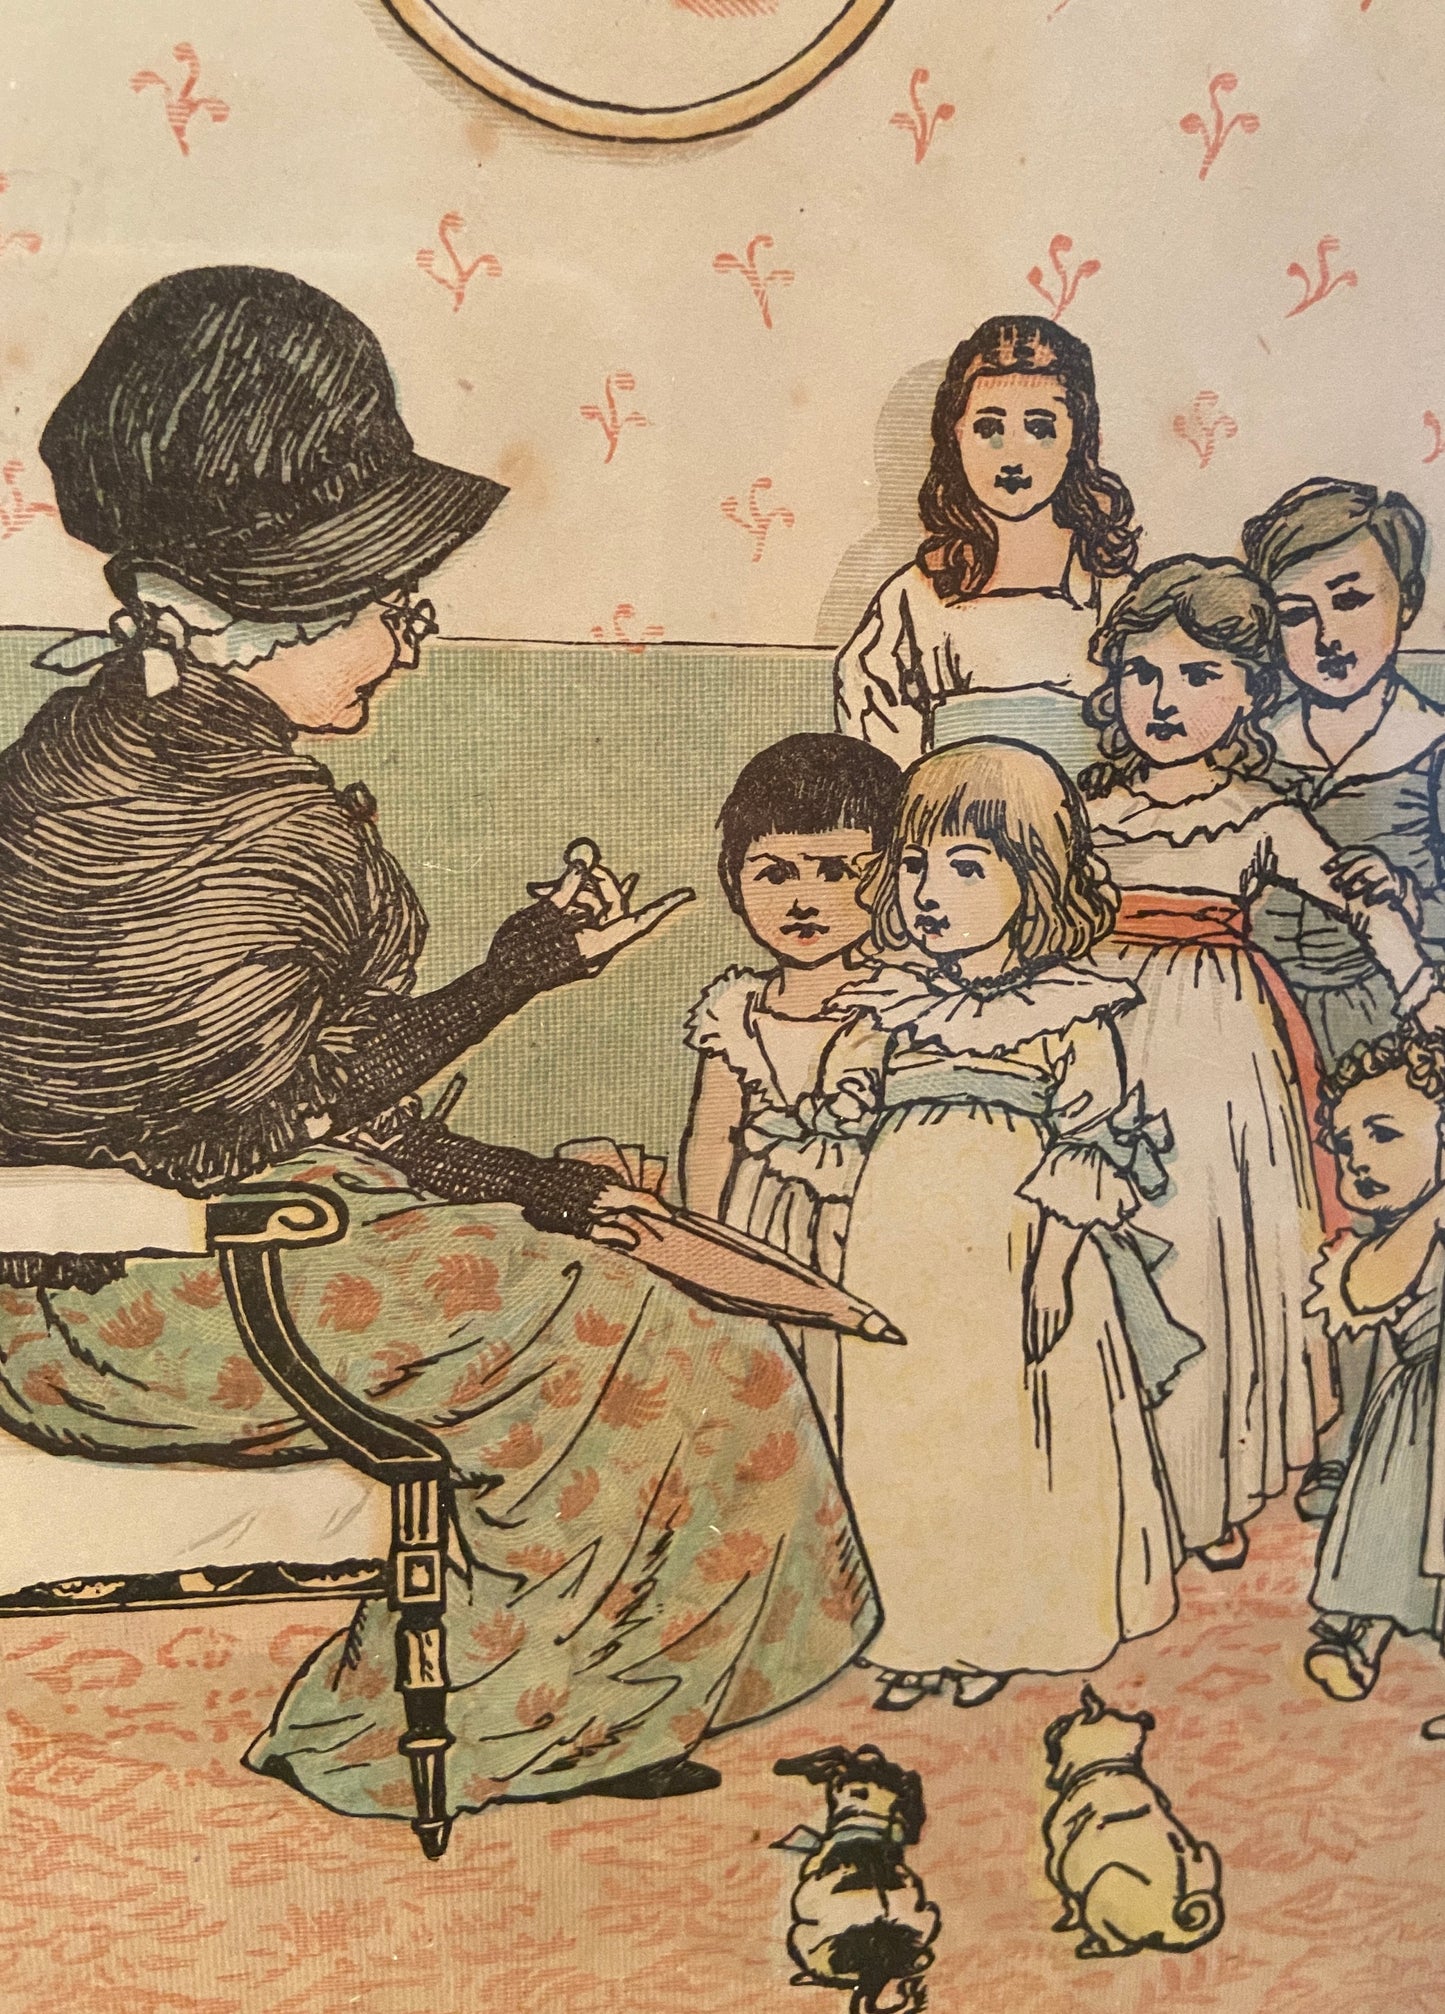 Antique Birdseye Maple Framed Children's Nursery Rhyme Prints